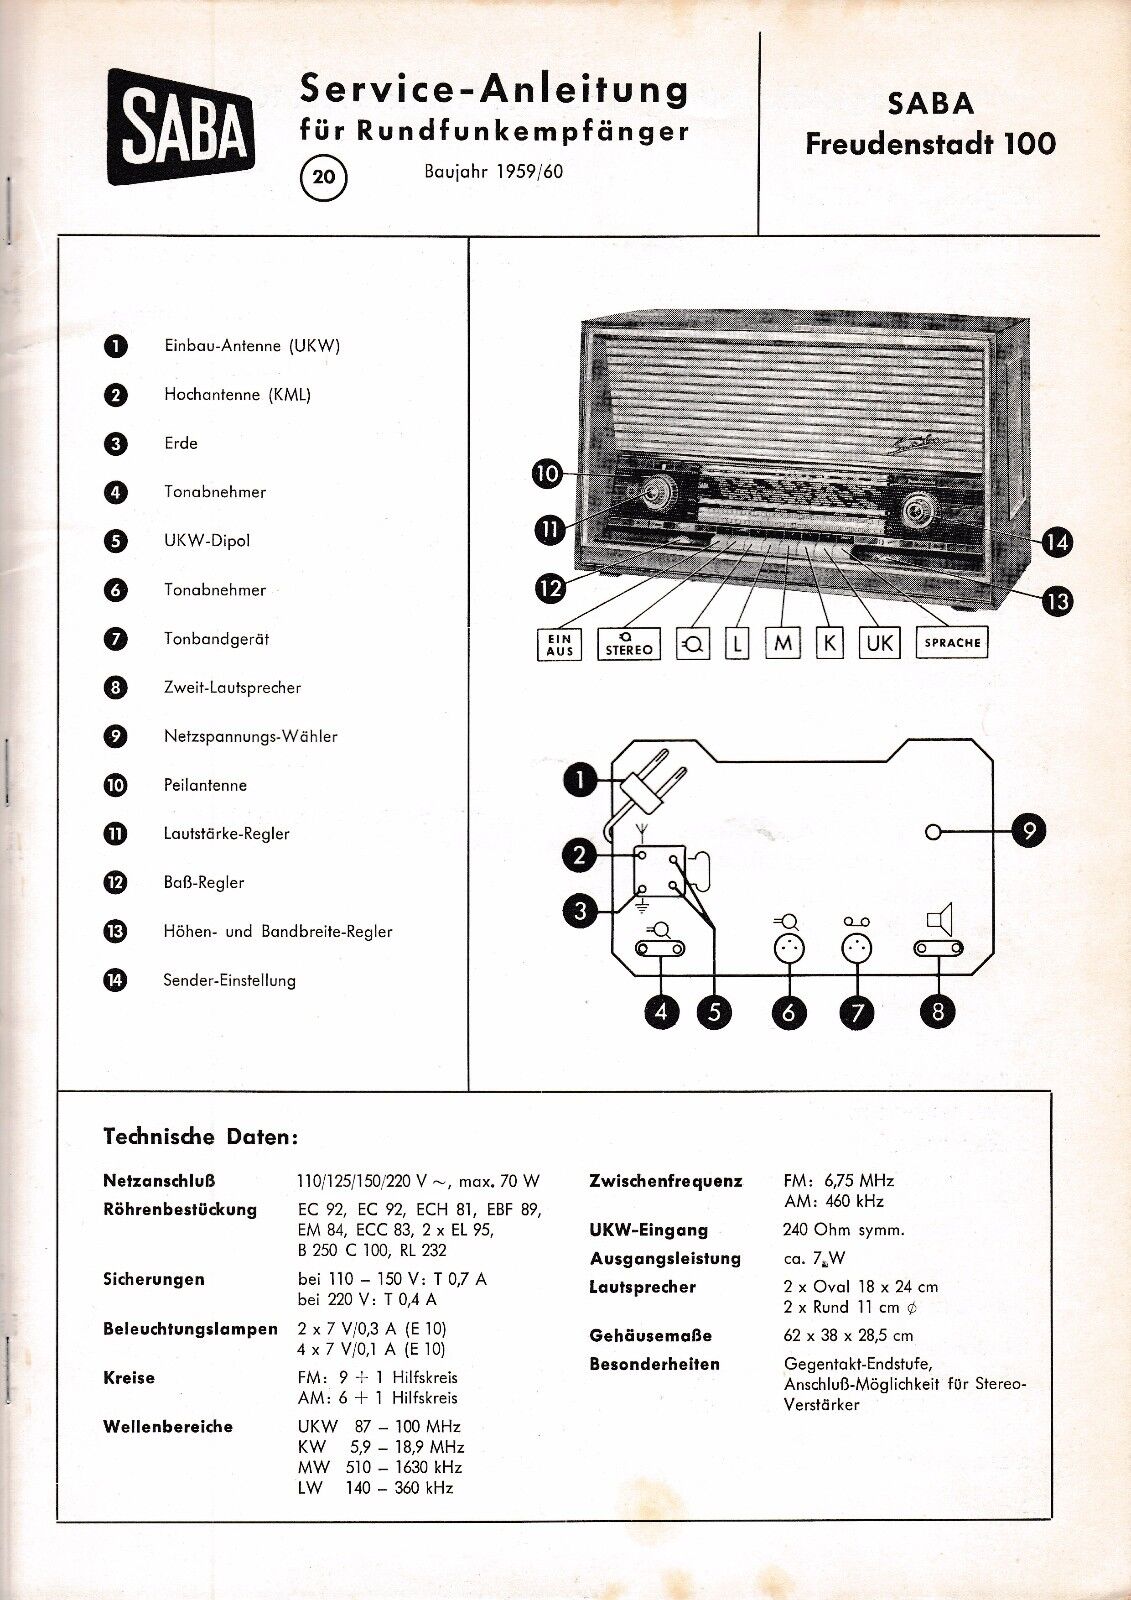 Service Manual Instructions for Saba Freudenstadt 100